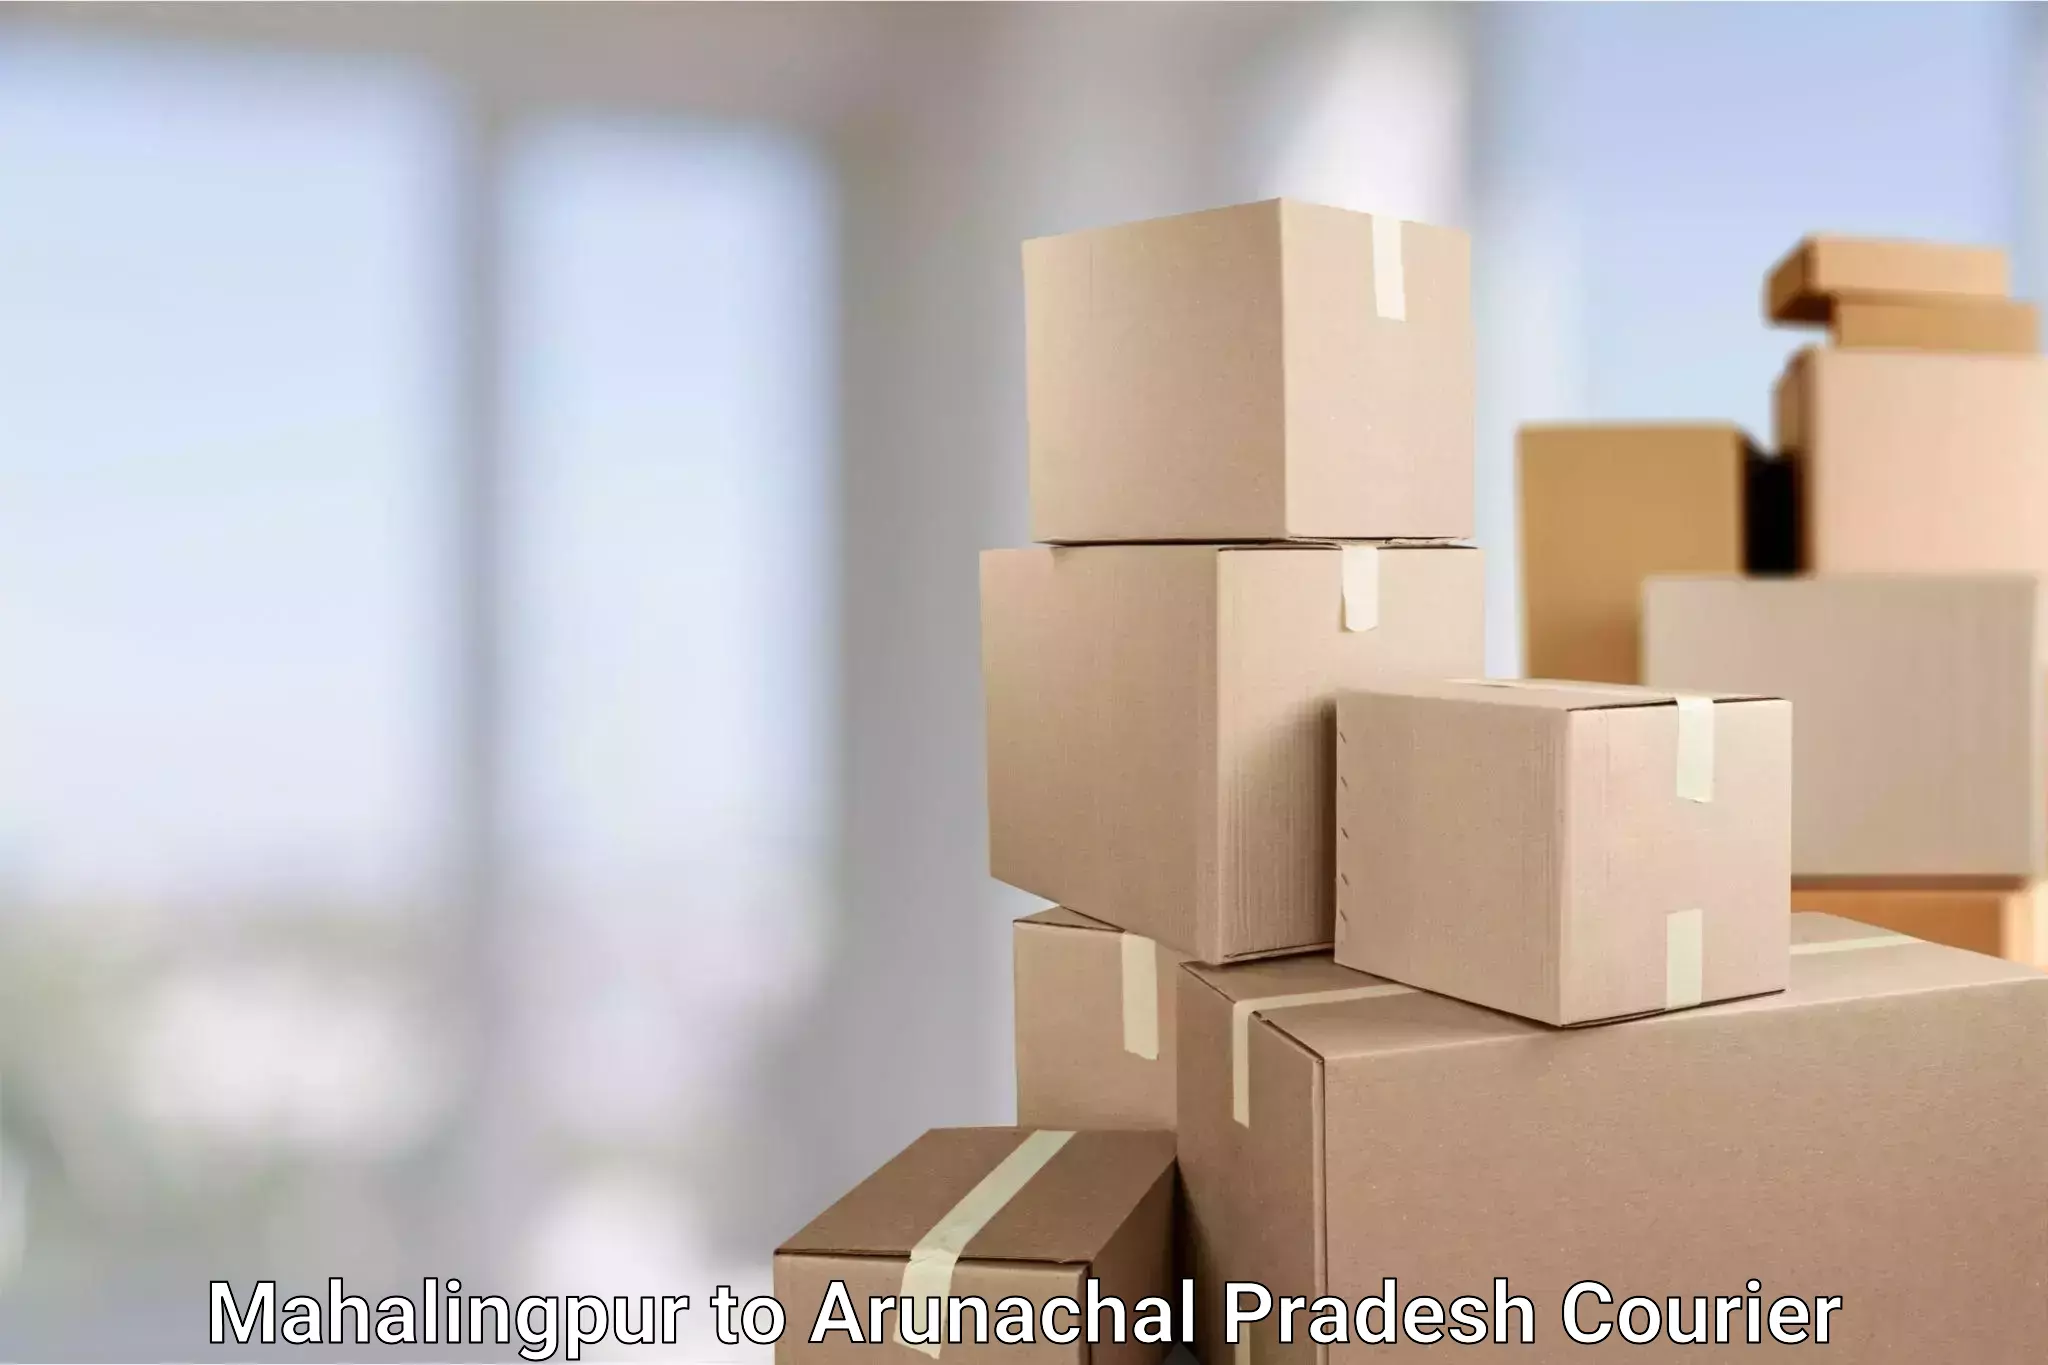 Fast delivery service Mahalingpur to Arunachal Pradesh